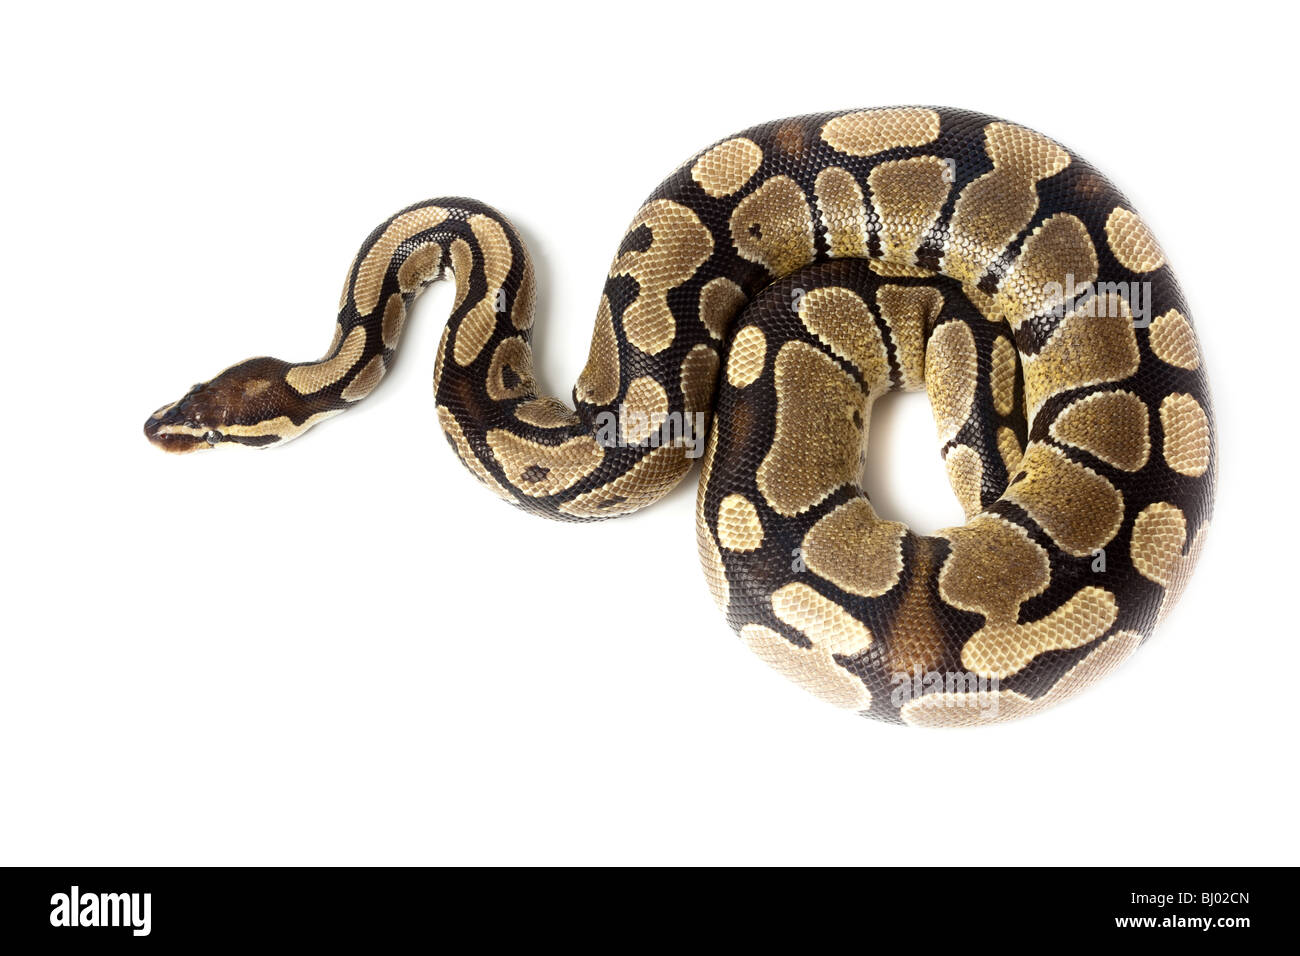 Royal Python, o sfera (Python Python regius), in studio contro uno sfondo bianco. Foto Stock